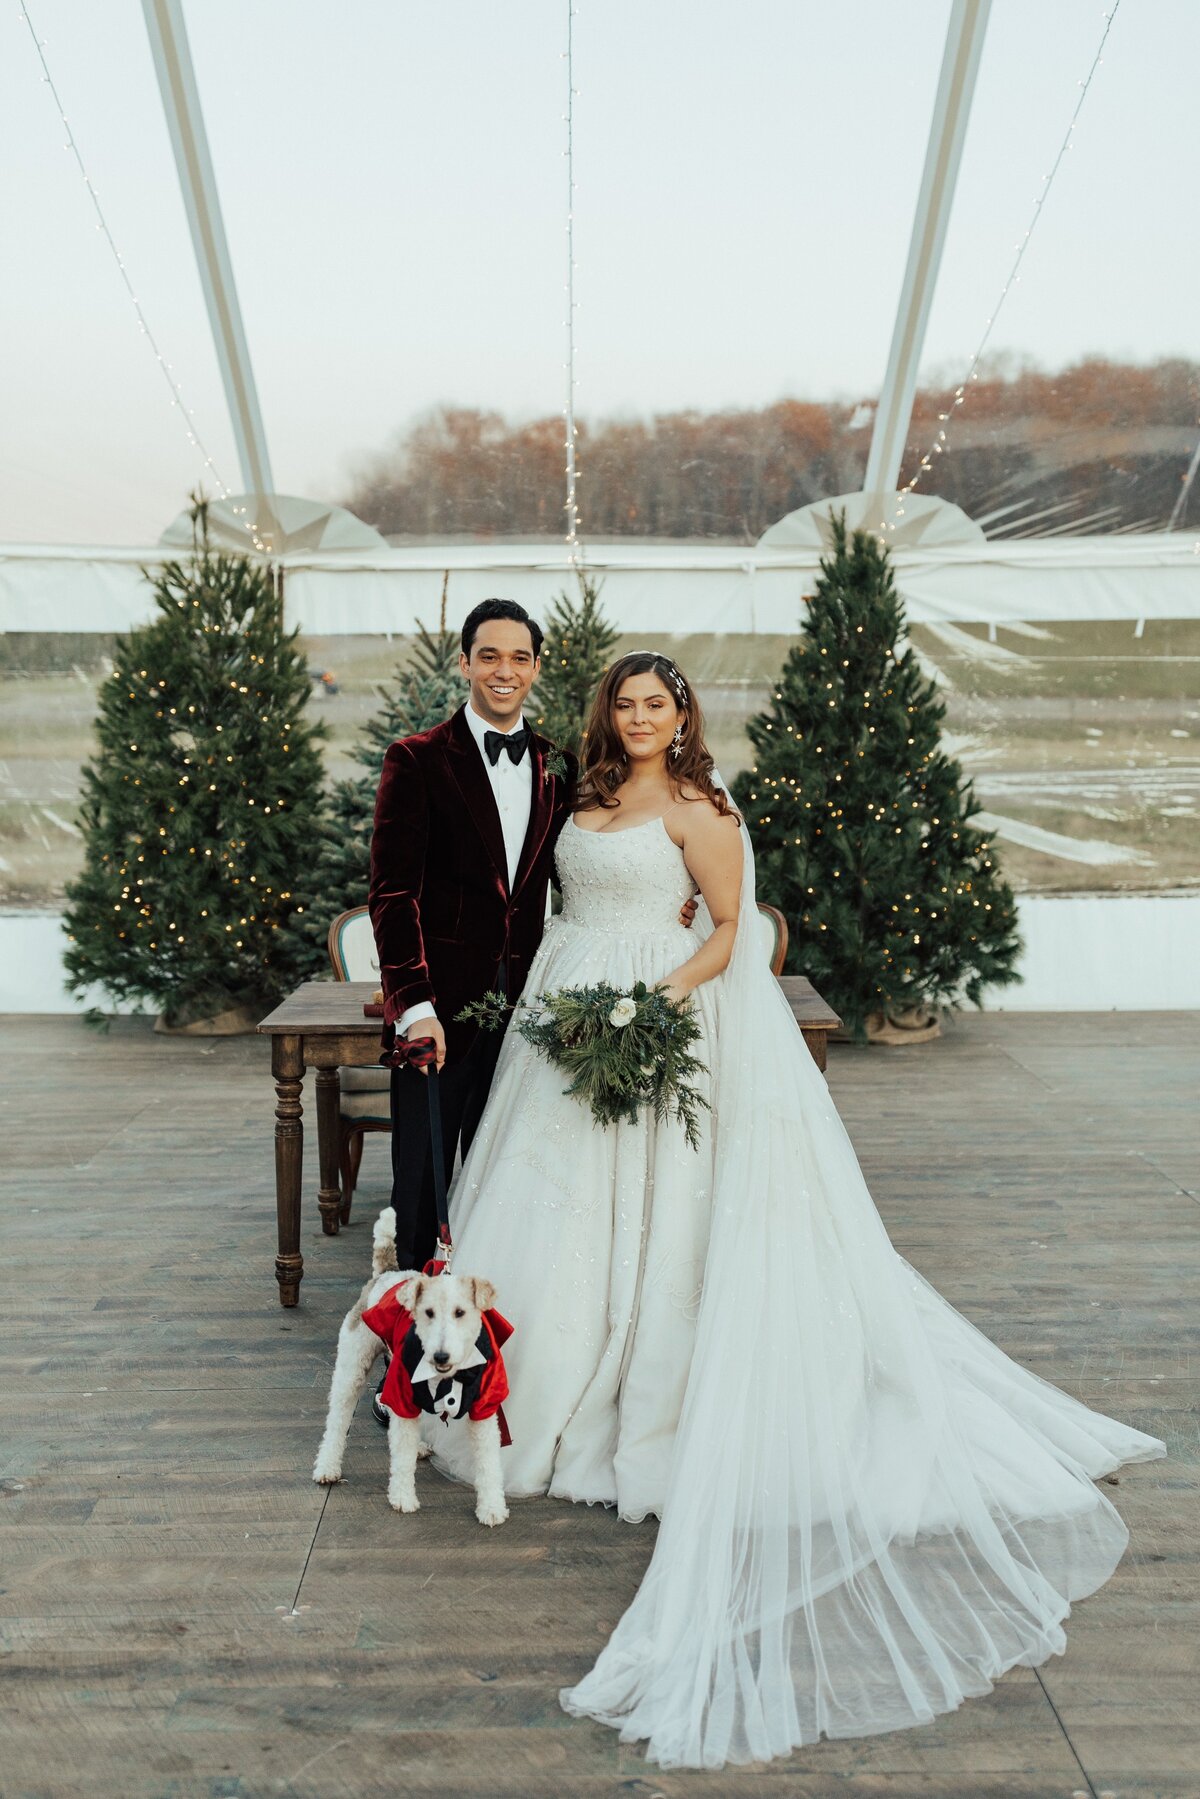 Christy-l-Johnston-Photography-Monica-Relyea-Events-Noelle-Downing-Instagram-Noelle_s-Favorite-Day-Wedding-Battenfelds-Christmas-tree-farm-Red-Hook-New-York-Hudson-Valley-upstate-november-2019-IMG_6628